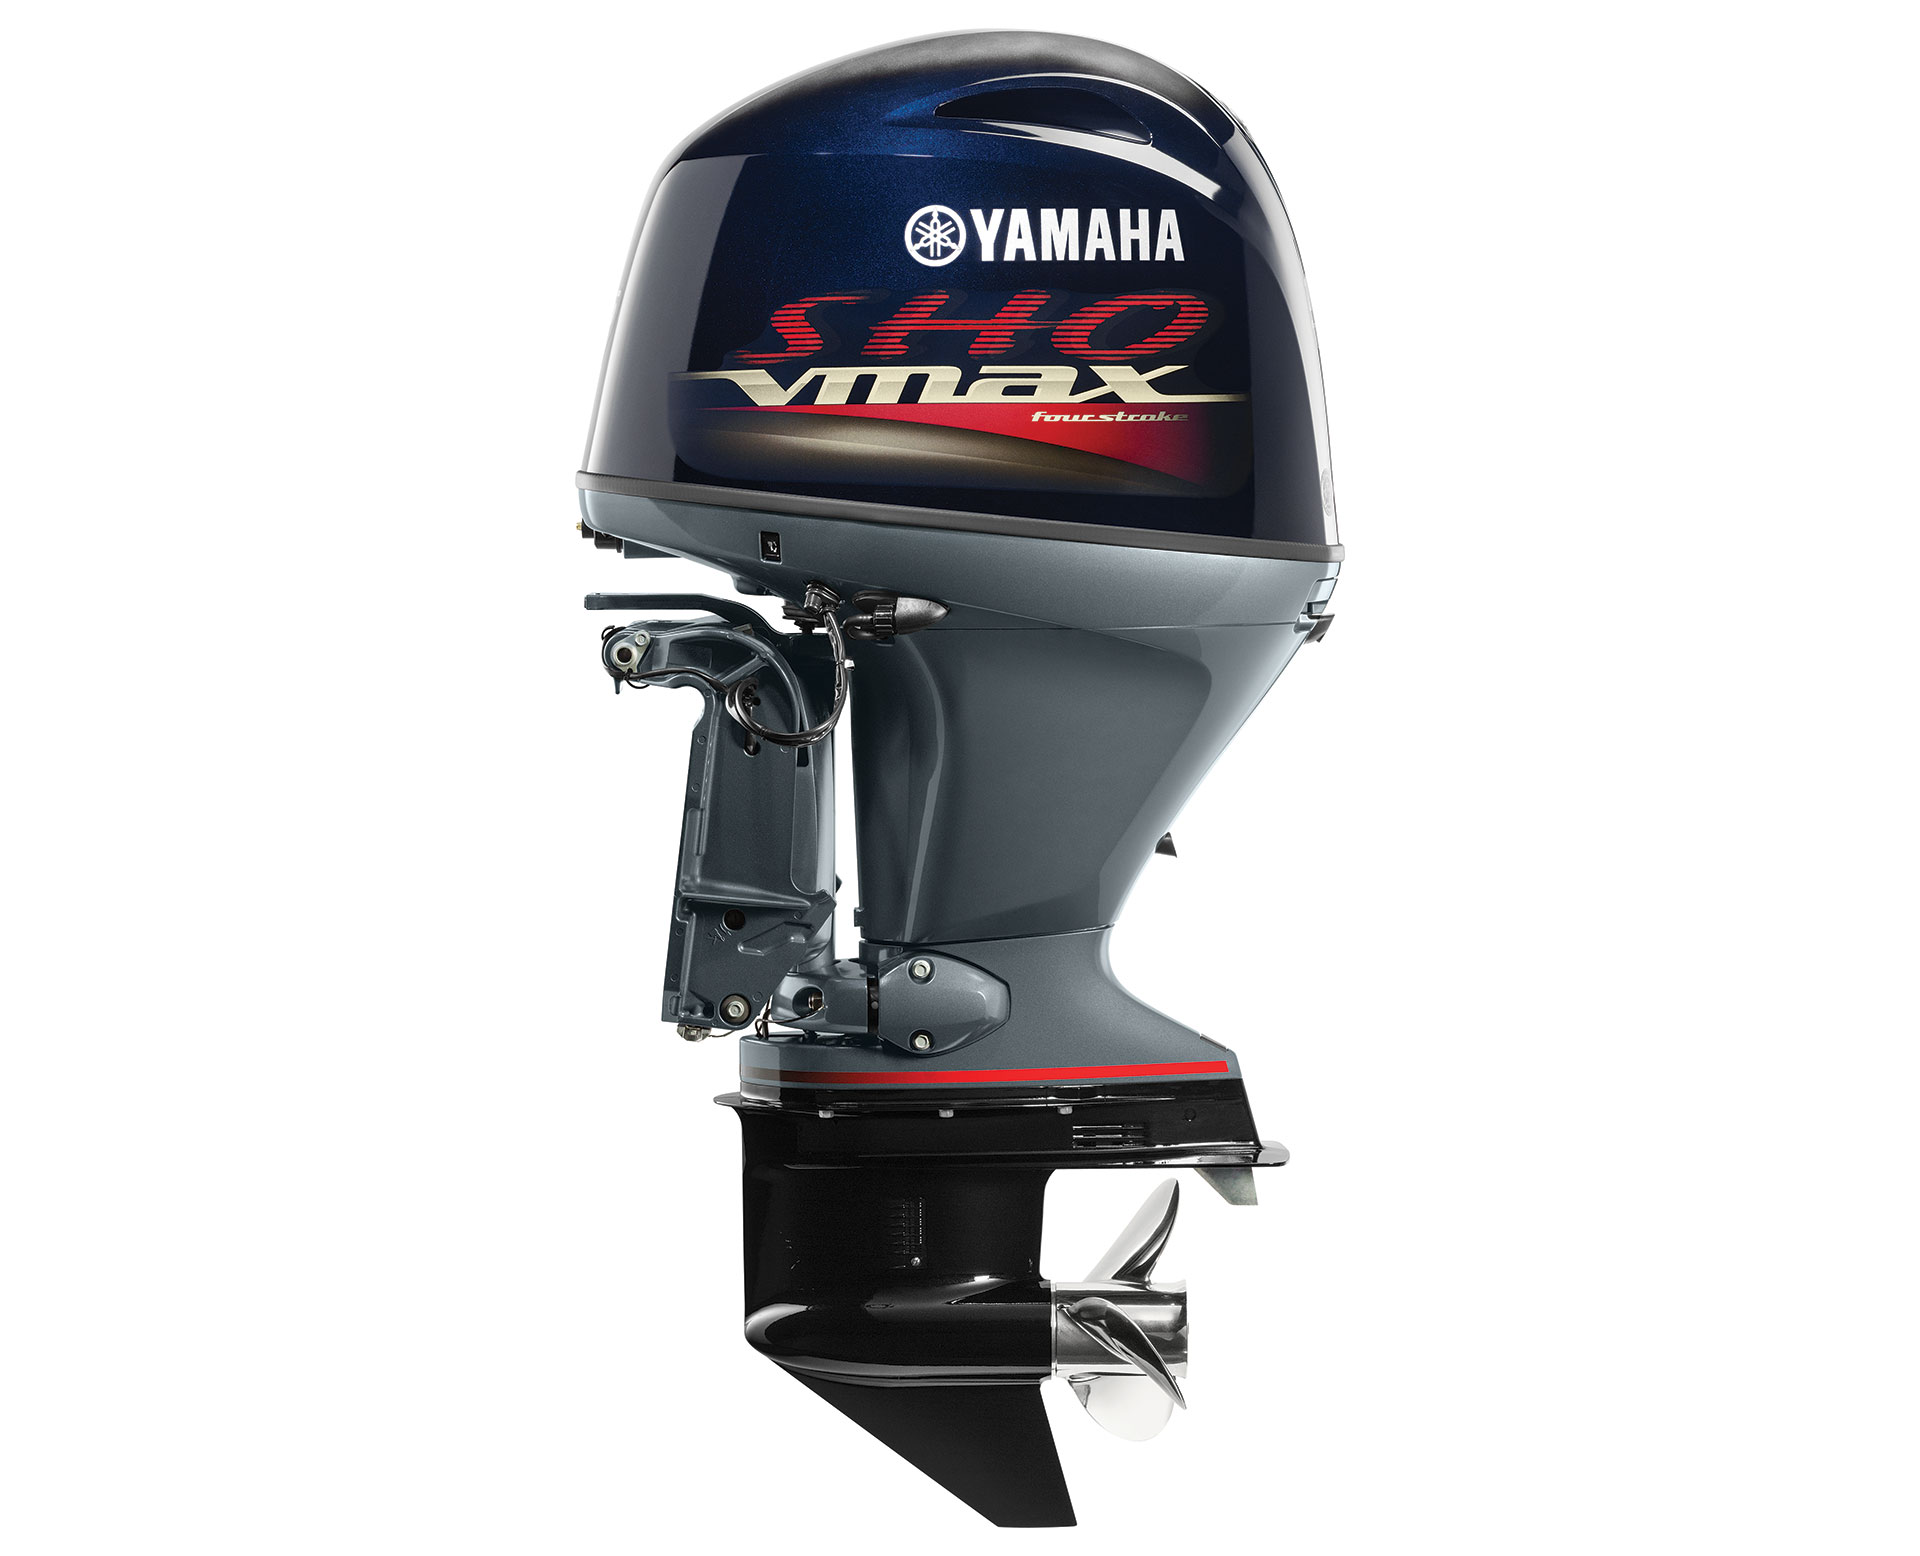 Thumbnail of your customized VF115 VMAX SHO B